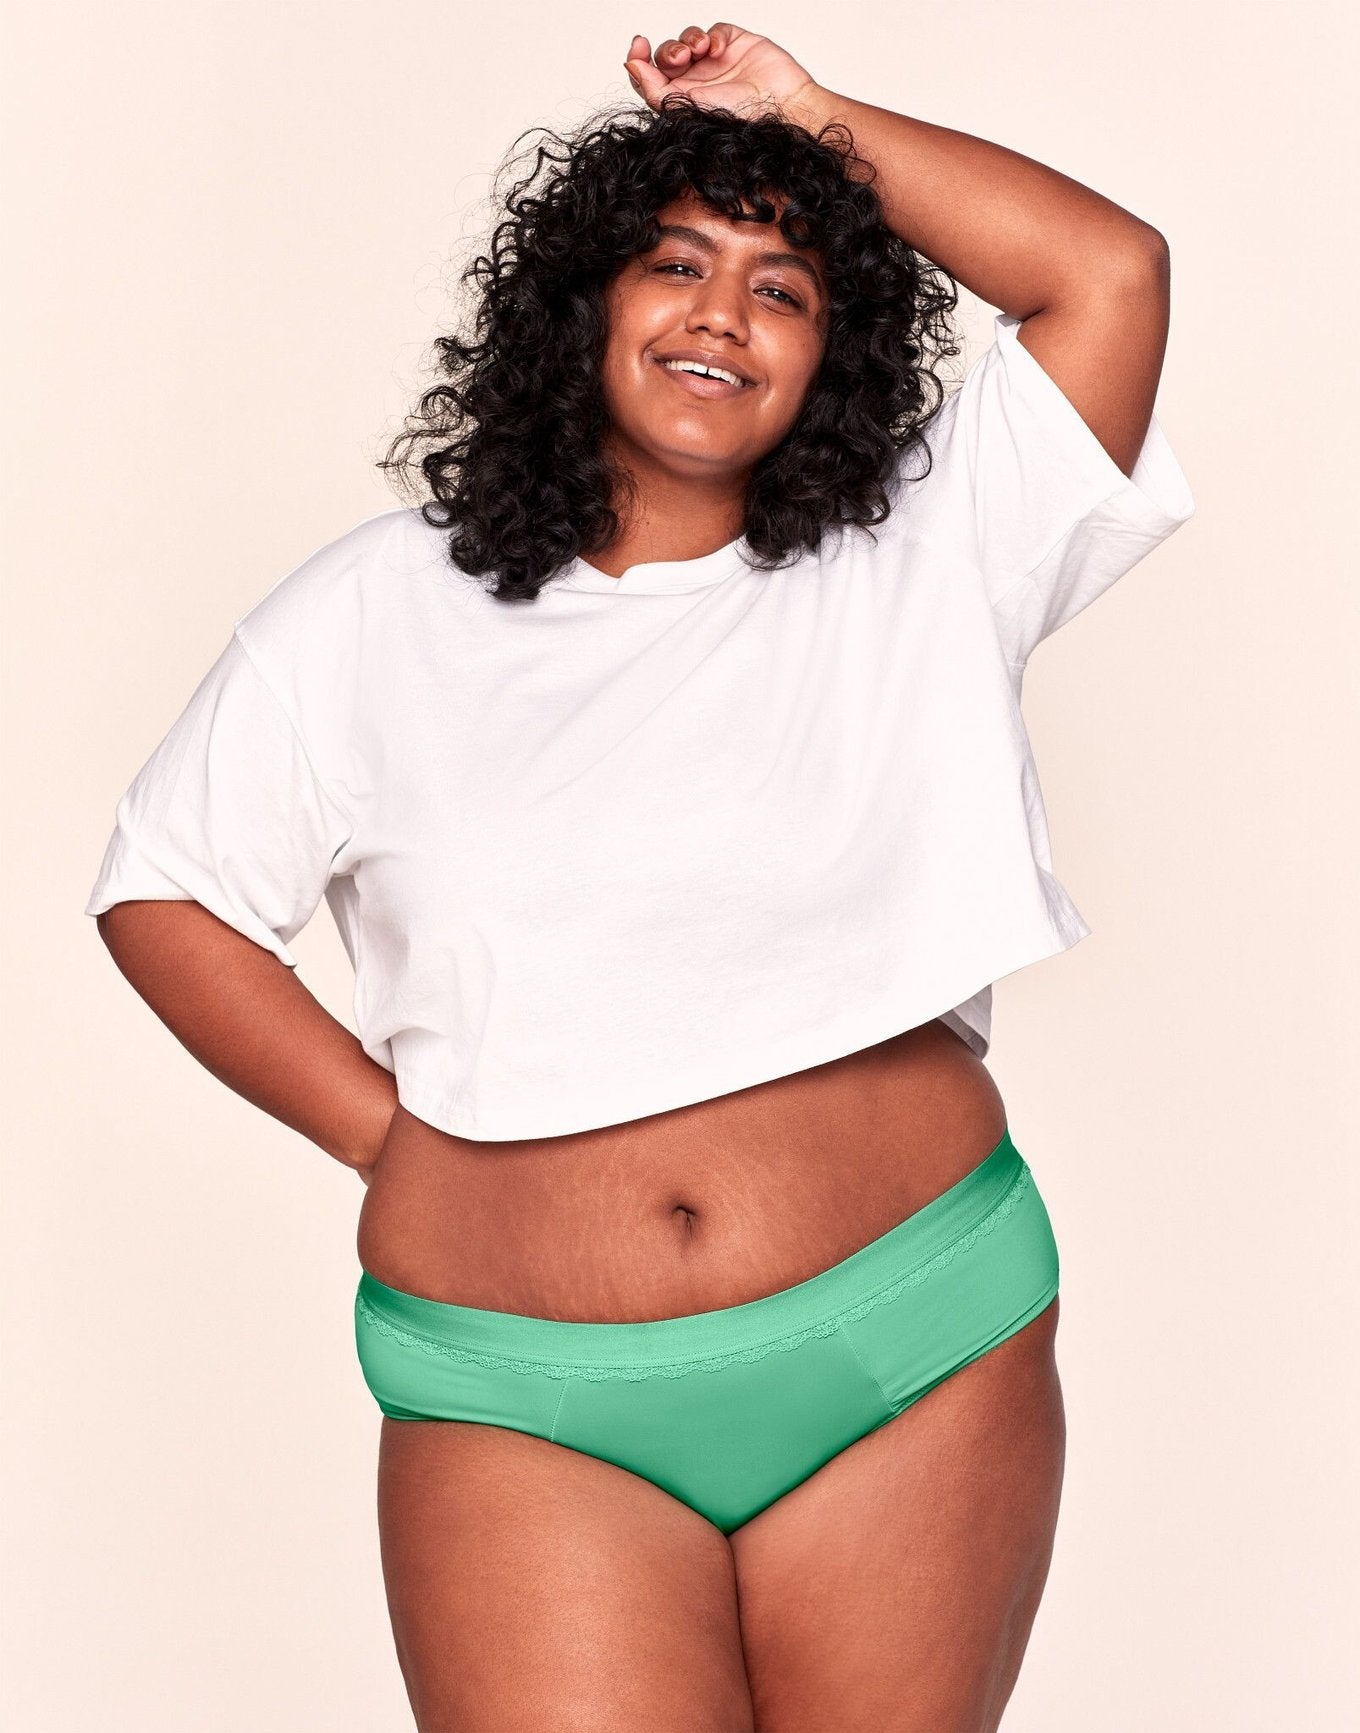 Joyja Cindy period-proof panty in color Jade Cream and shape cheeky